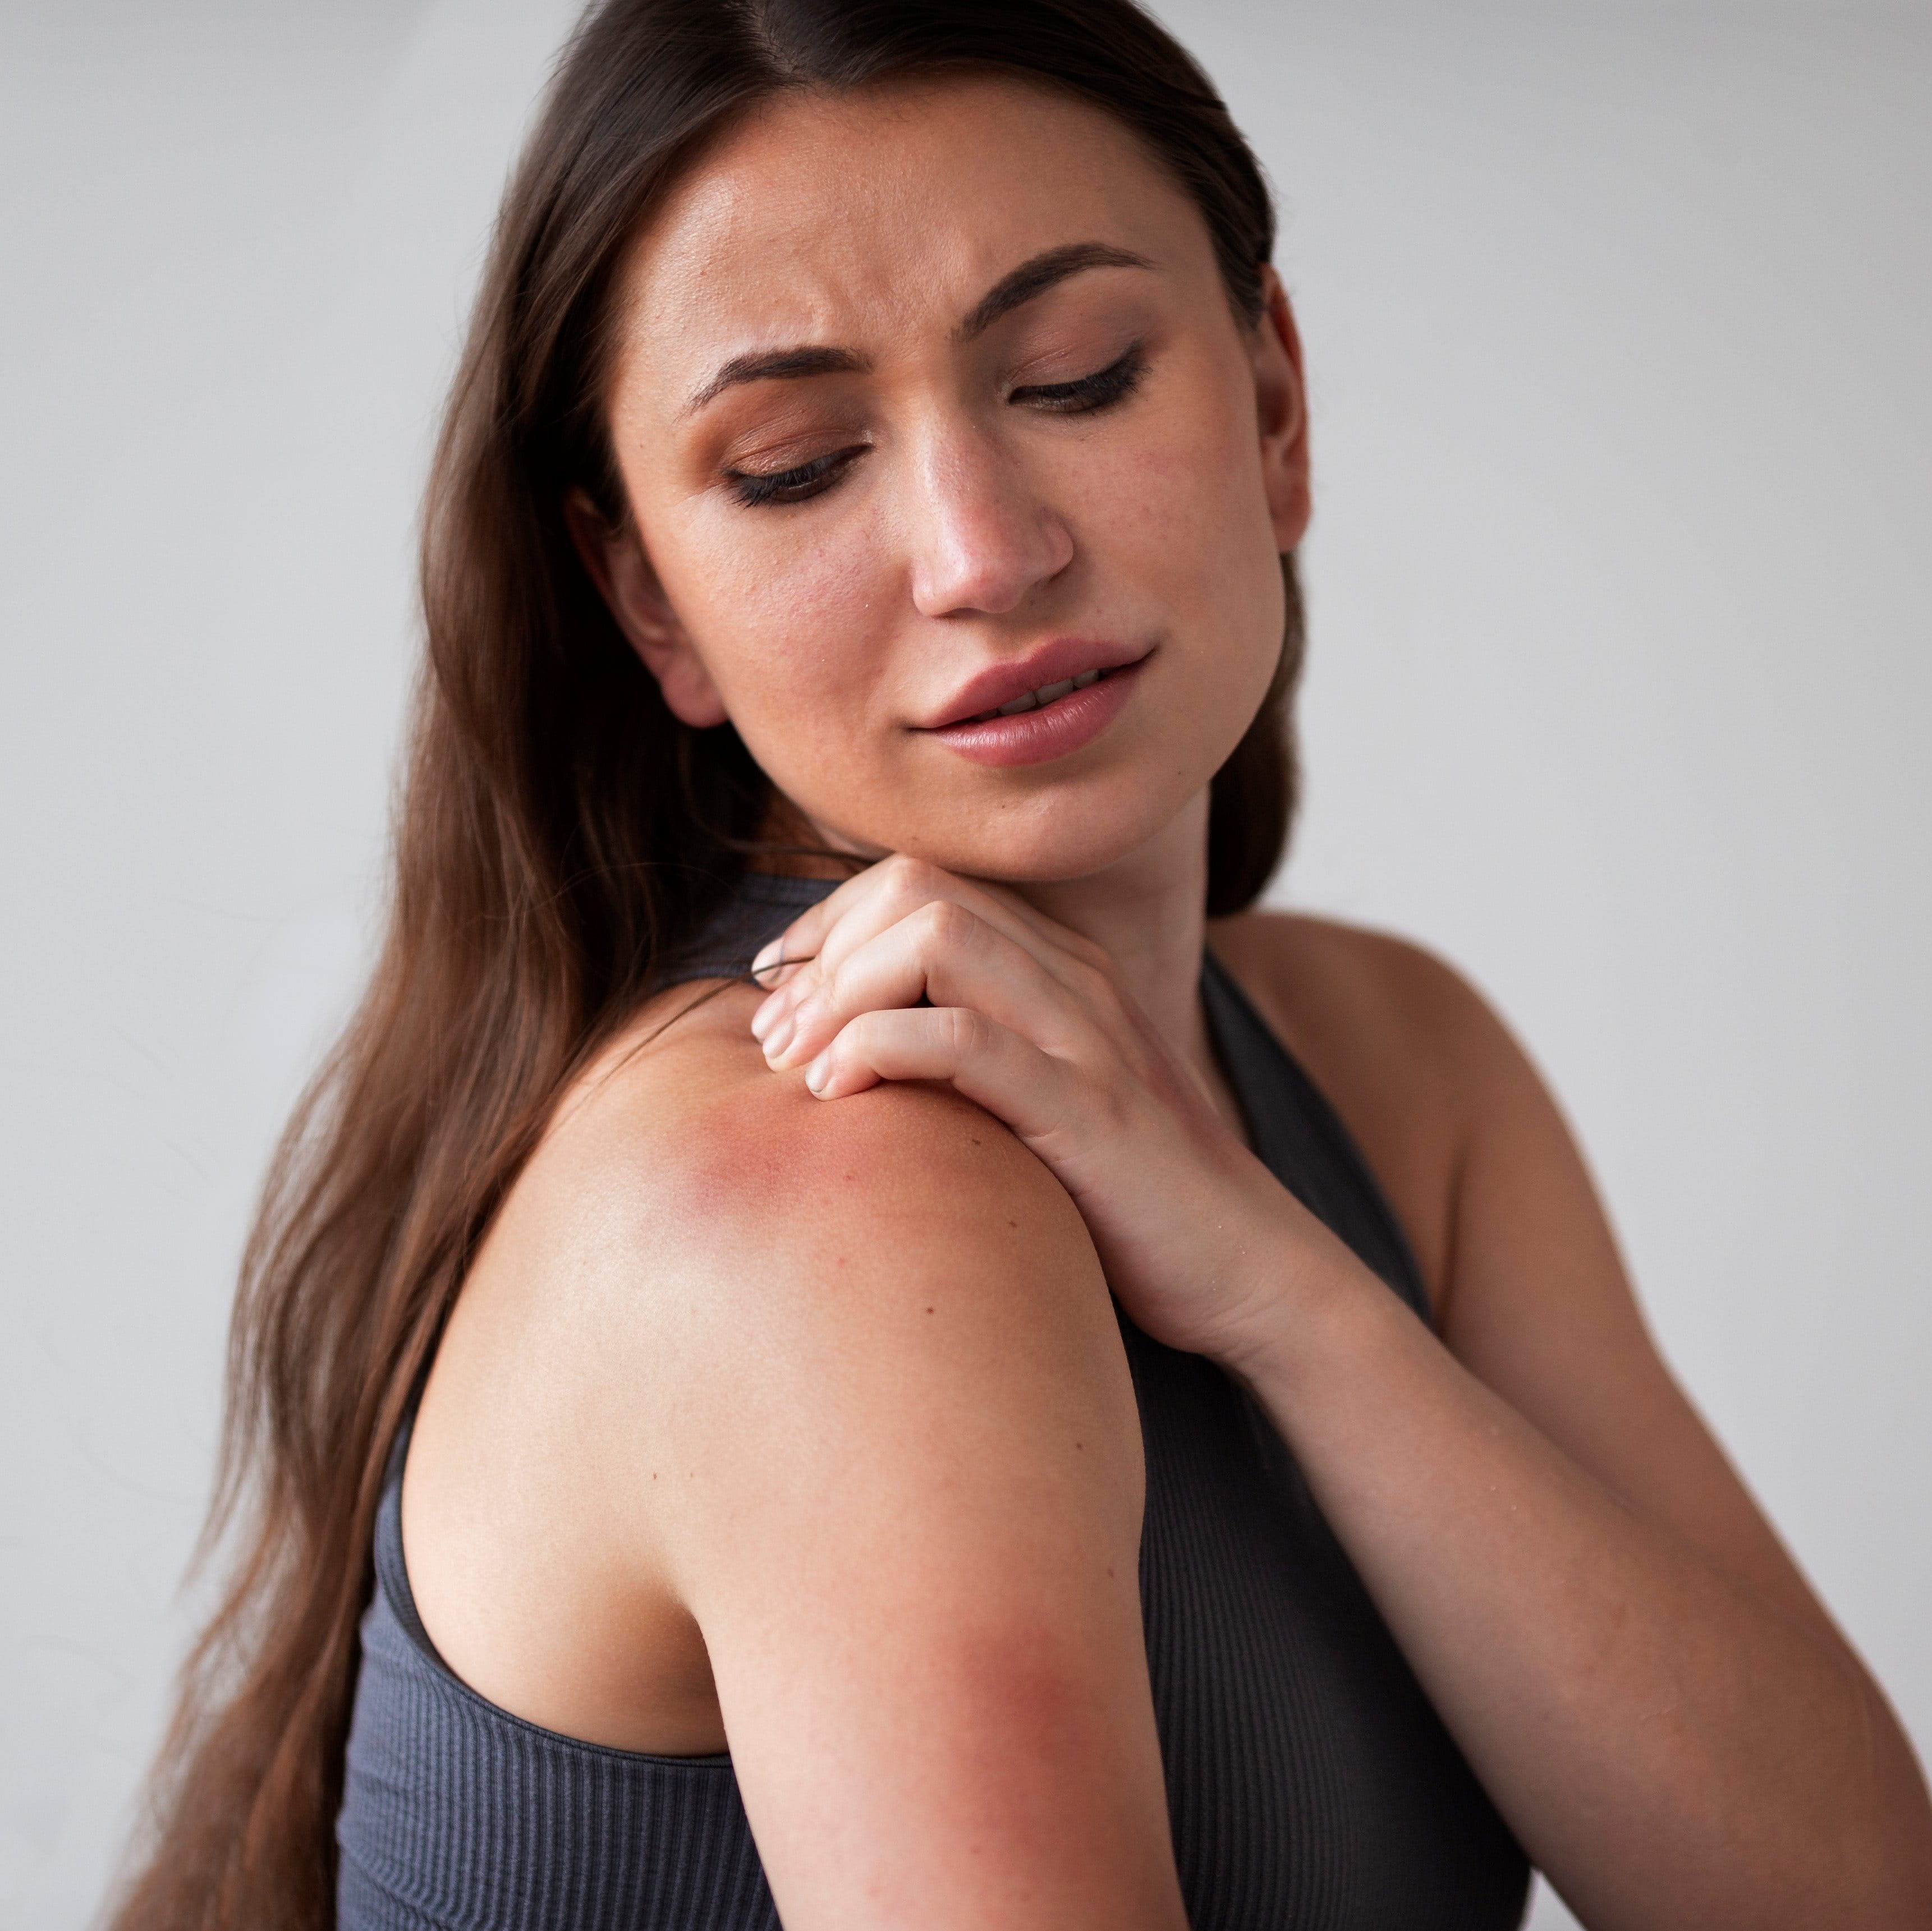 Woman suffering from sunburn